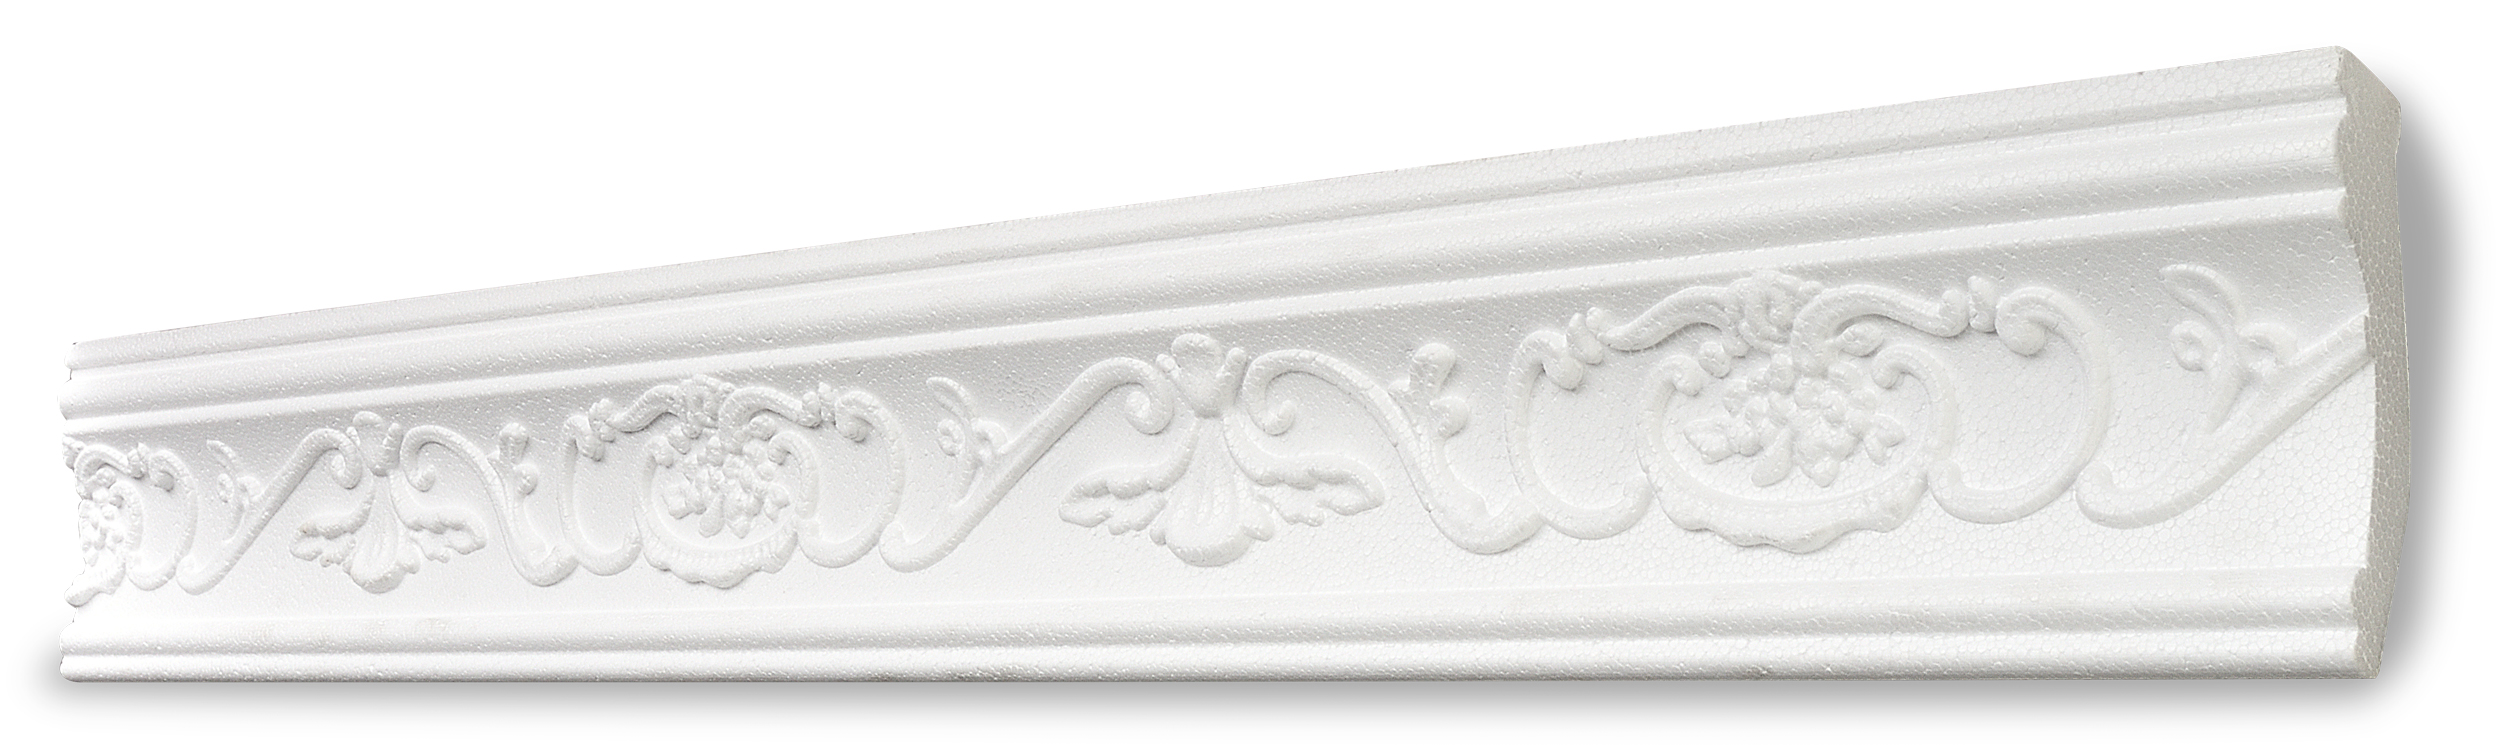 Decosa Zierprofil G6 (Gianna), weiß, 35 x 75 mm, Länge: 2 m